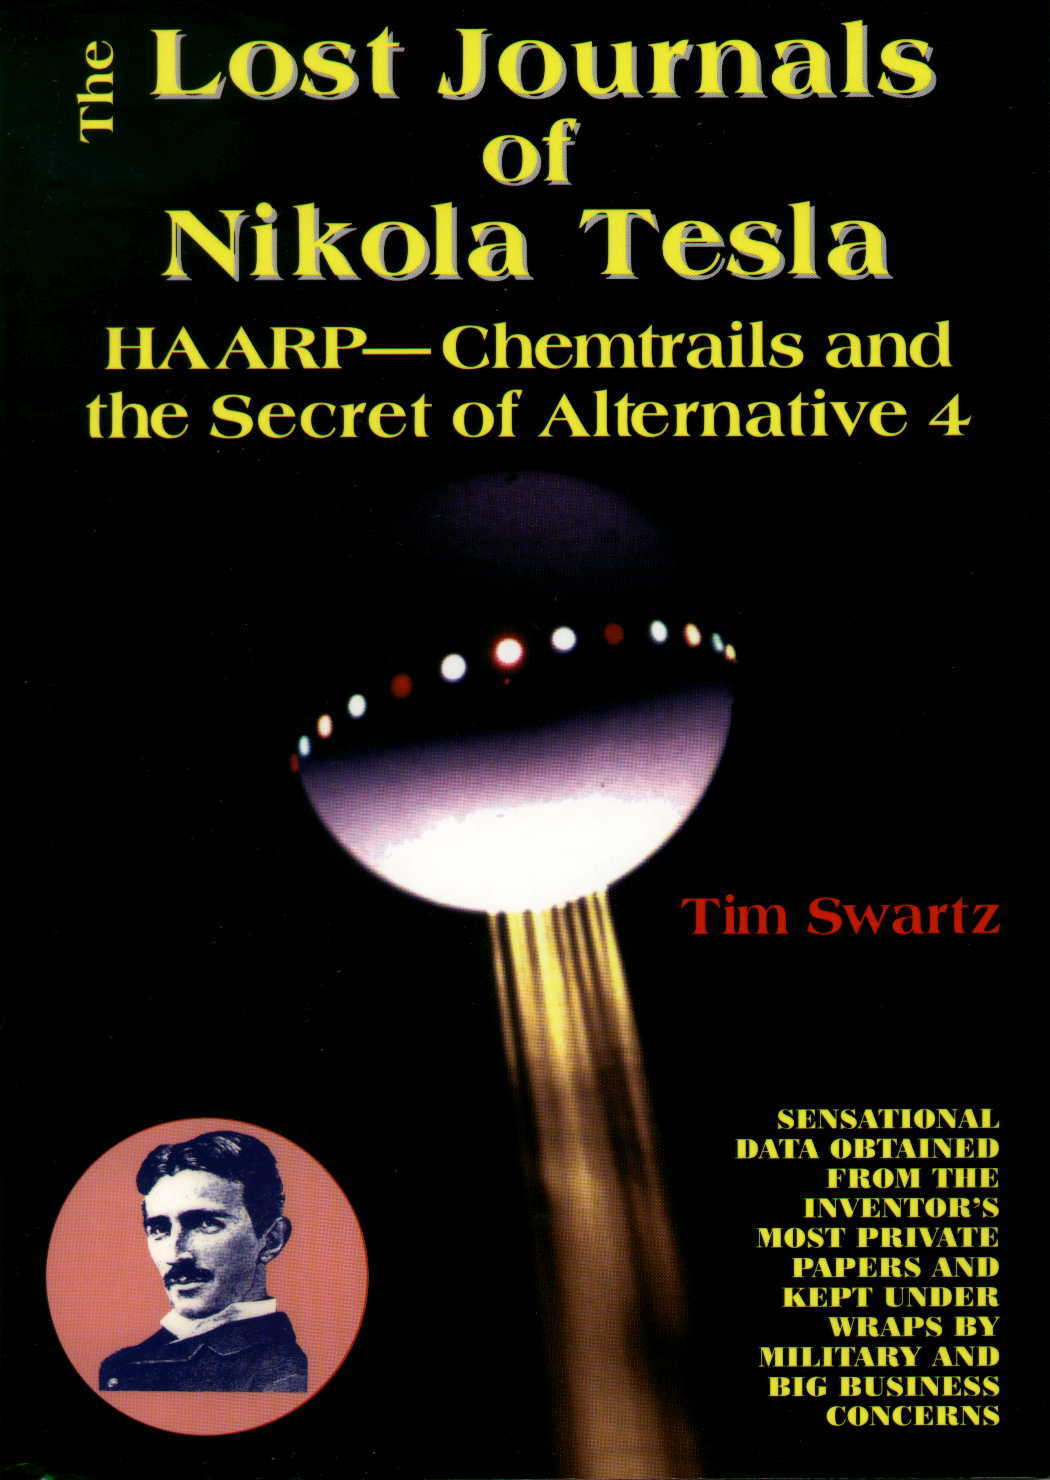 Lost Journals 
of Nikola Tesla, By Tim Swartz